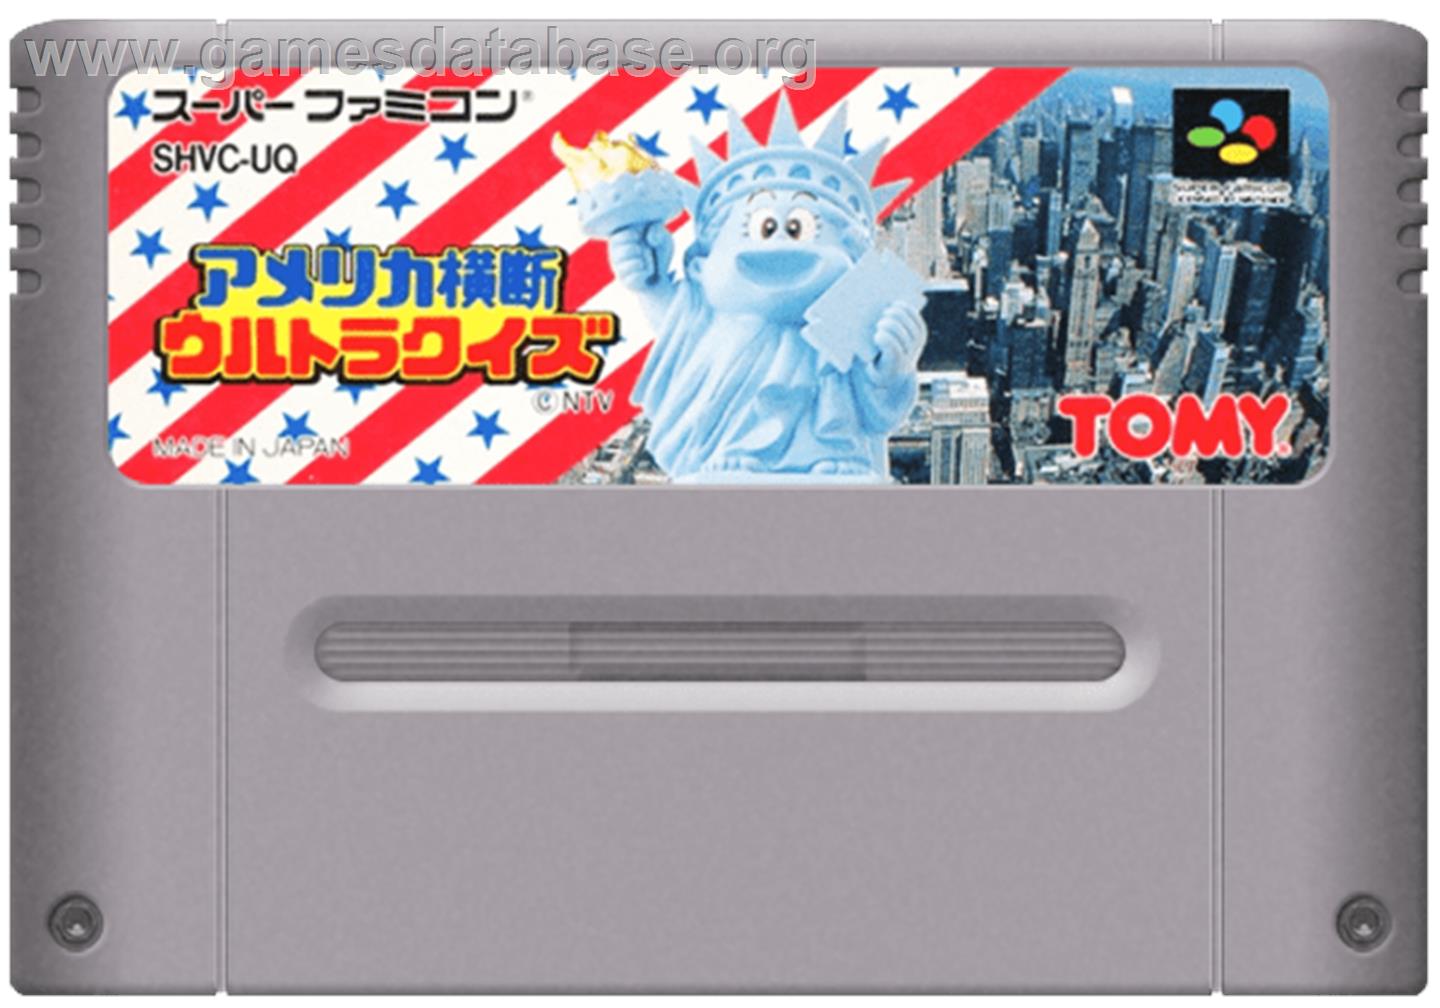 America Oudan Ultra Quiz - Nintendo SNES - Artwork - Cartridge